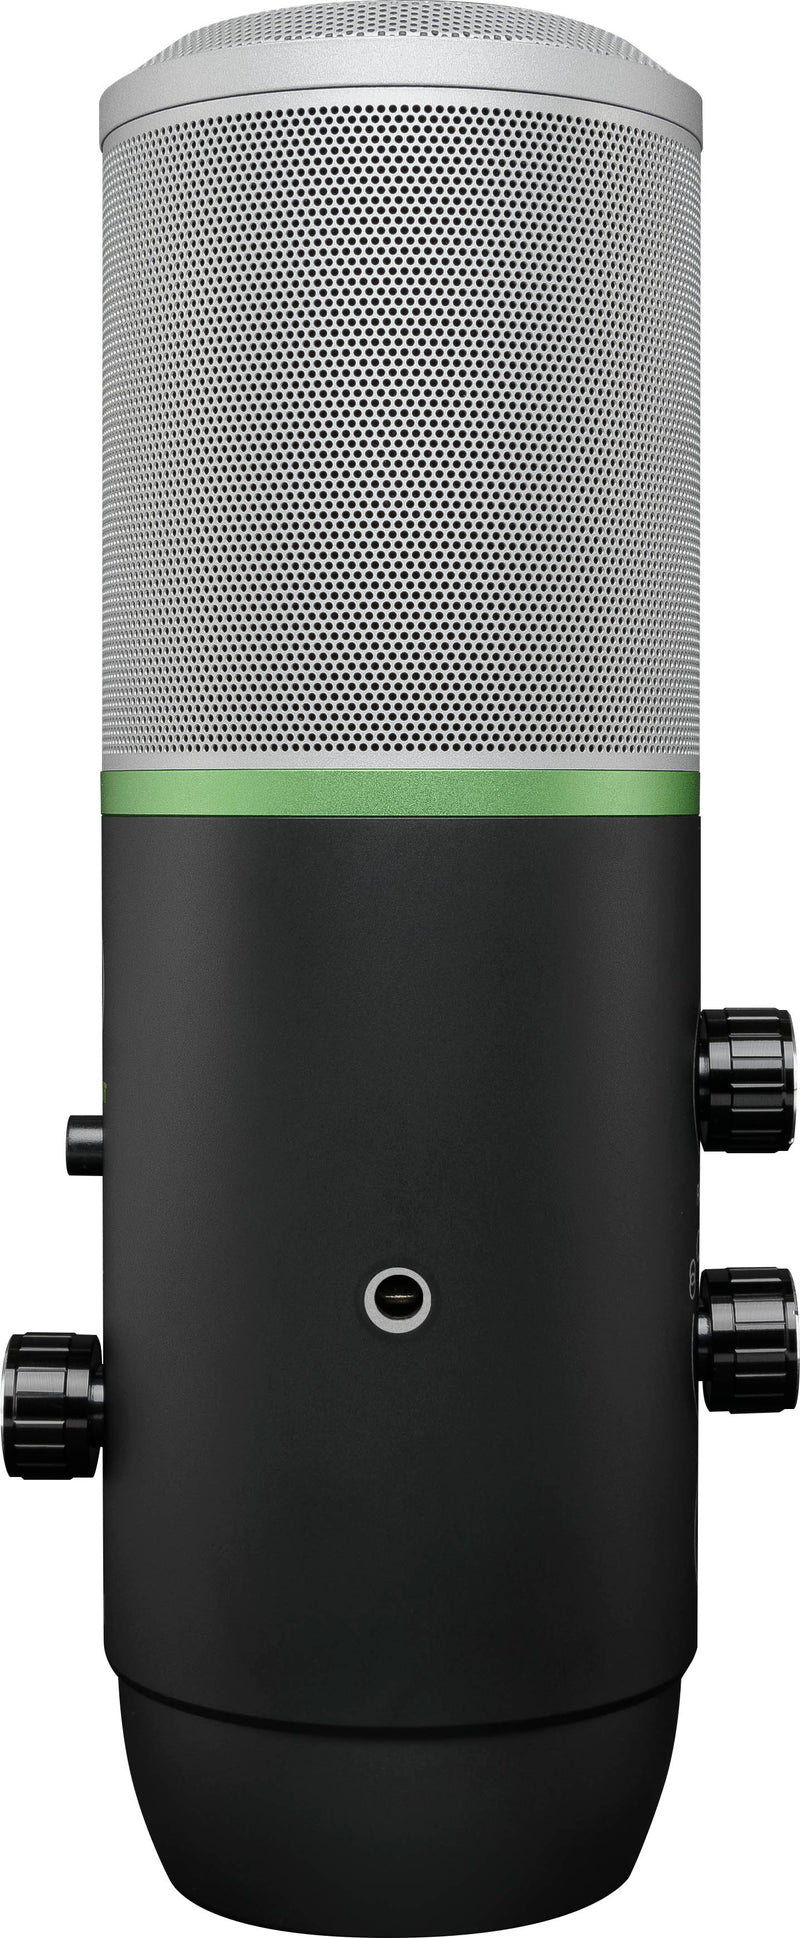 Mackie CARBON EleMent Series USB Condenser Microphone